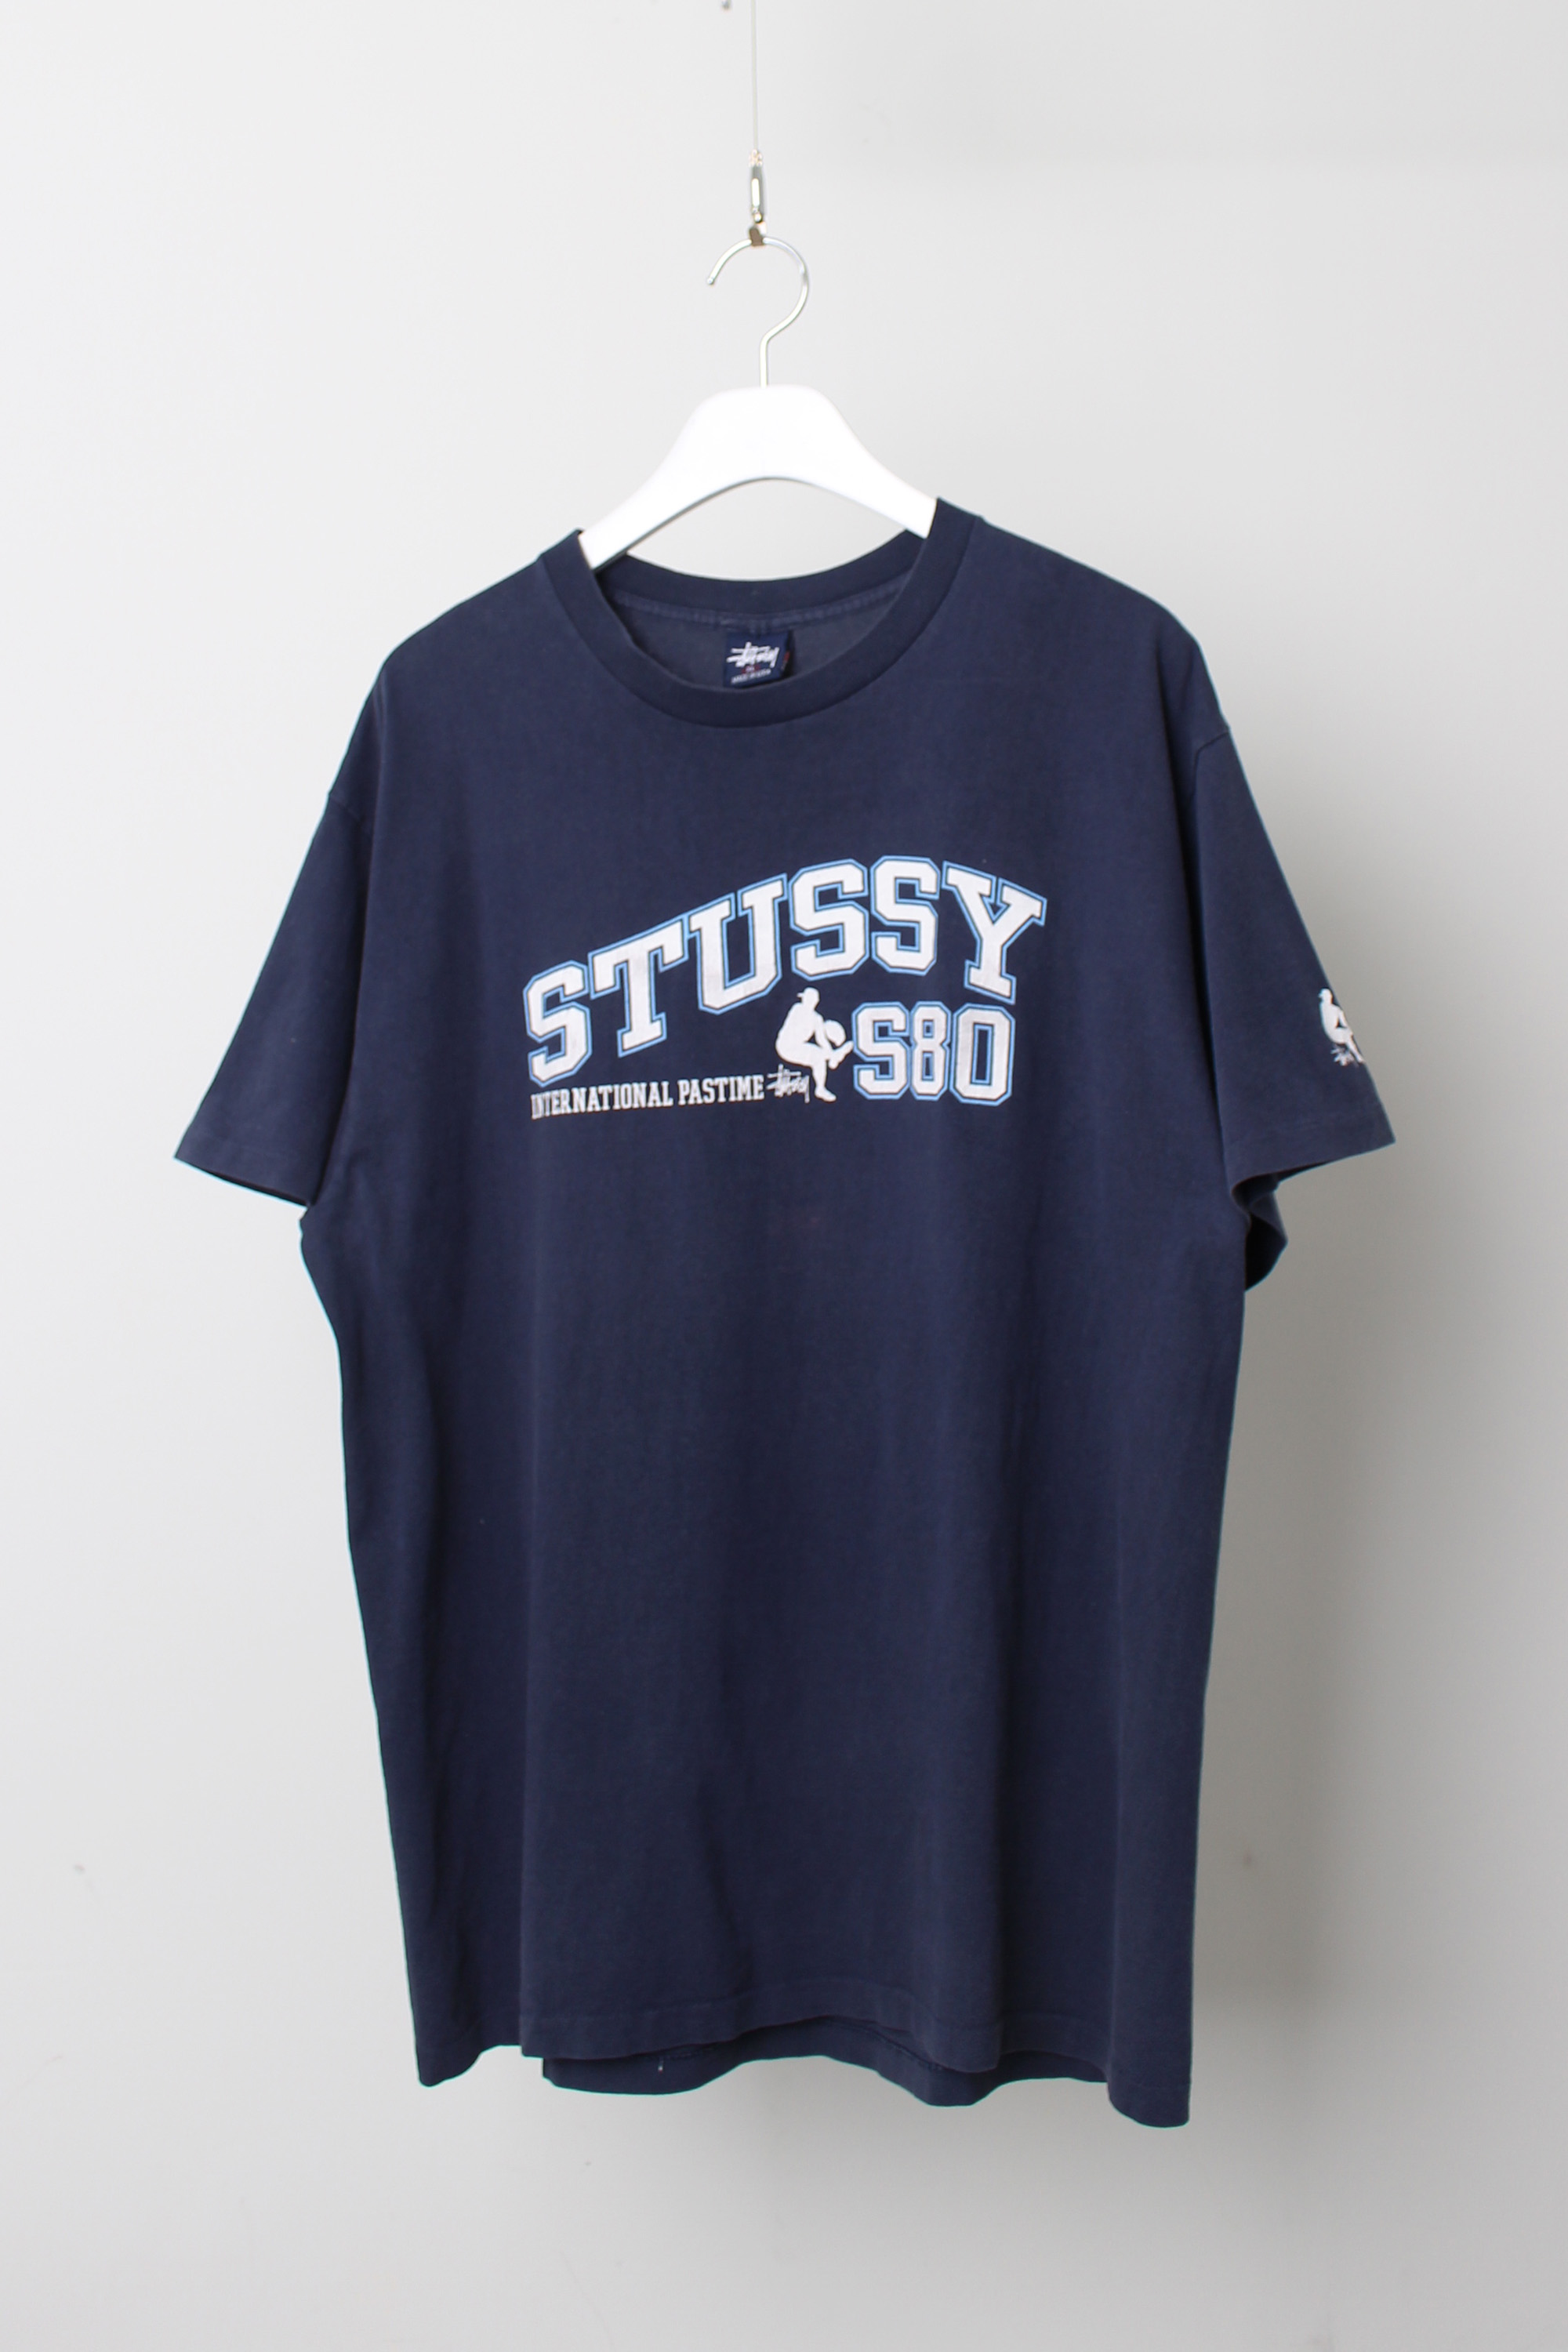 Vintage STUSSY S80 t-shirt